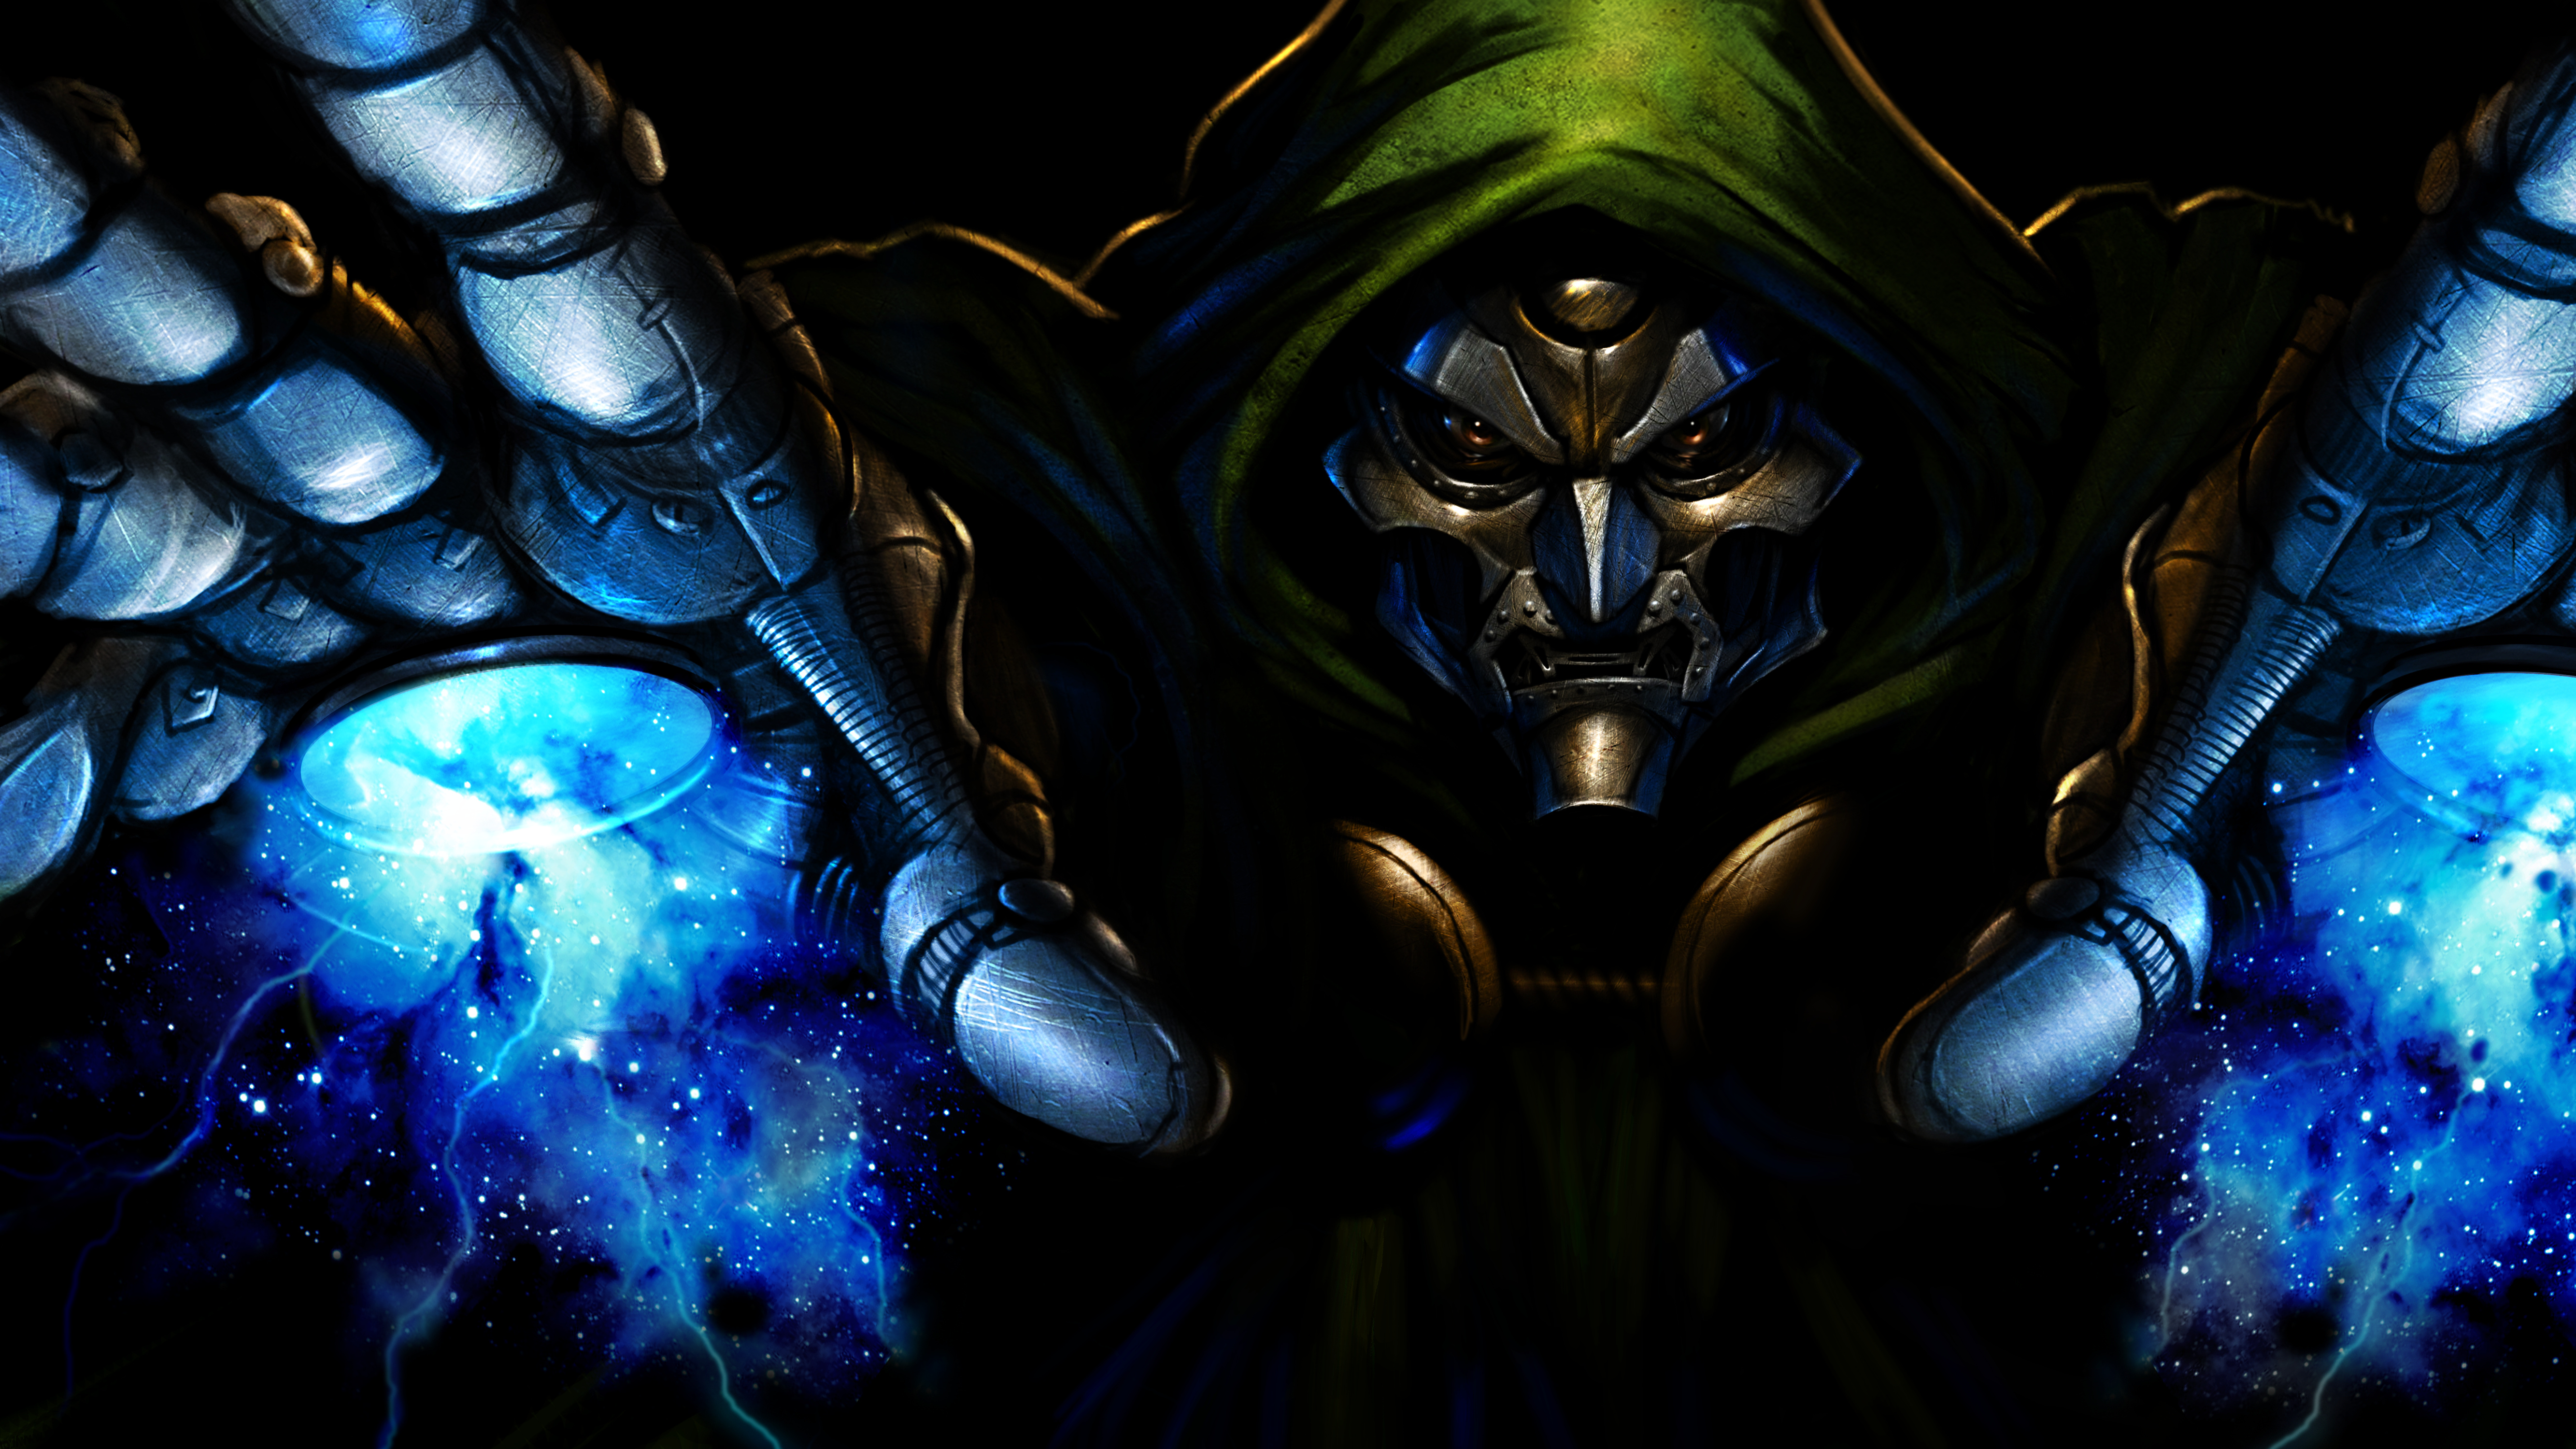 Dr. Doom, villians, Marvel Ultimate Alliance - desktop wallpaper